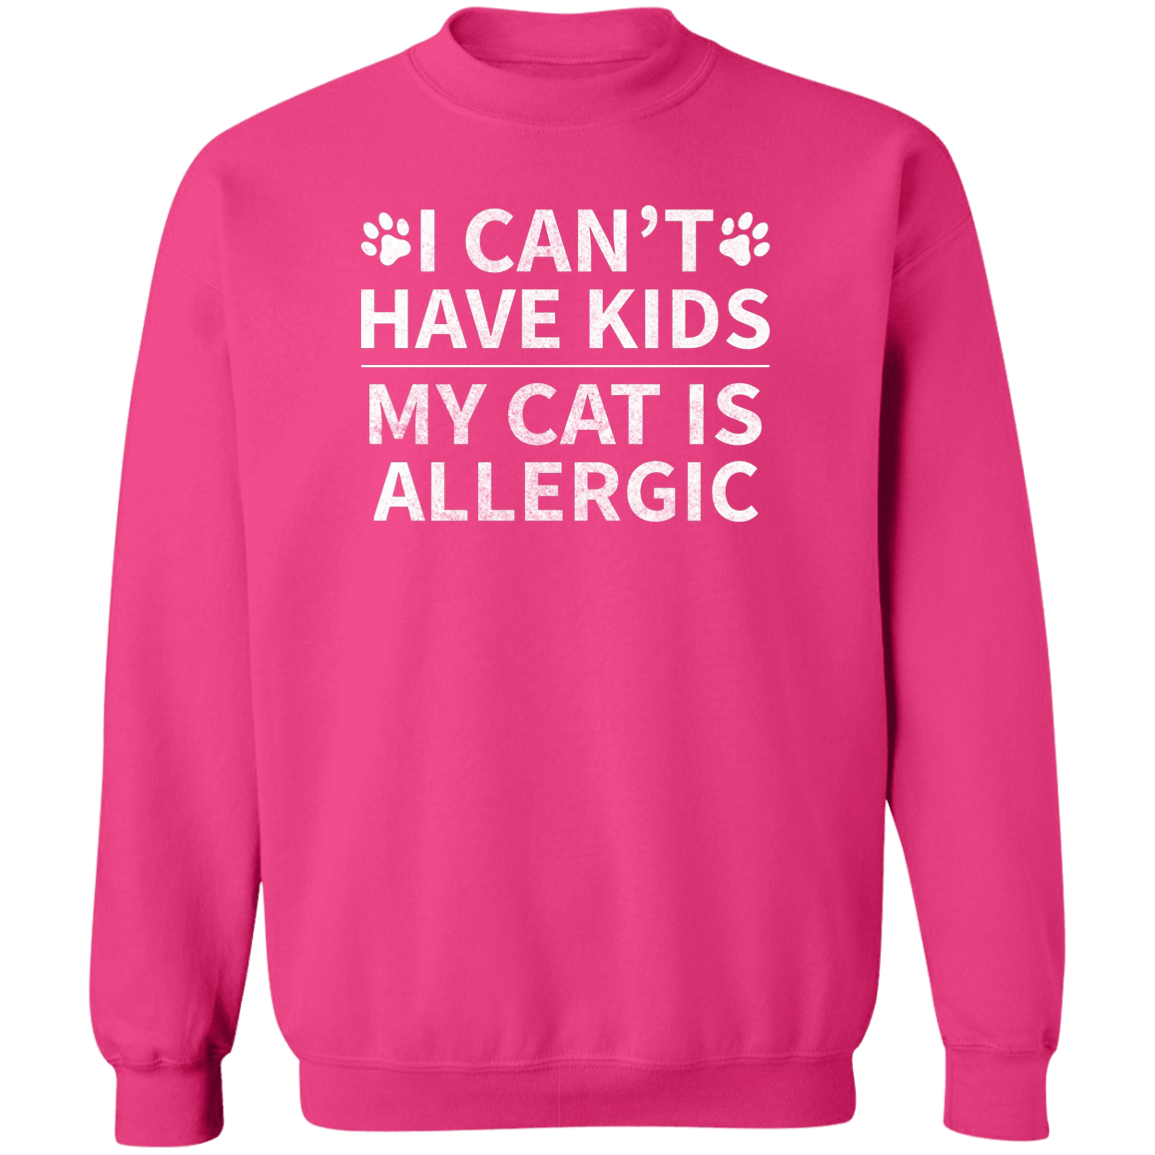 My Cat Is Allergic - Sweatshirt.